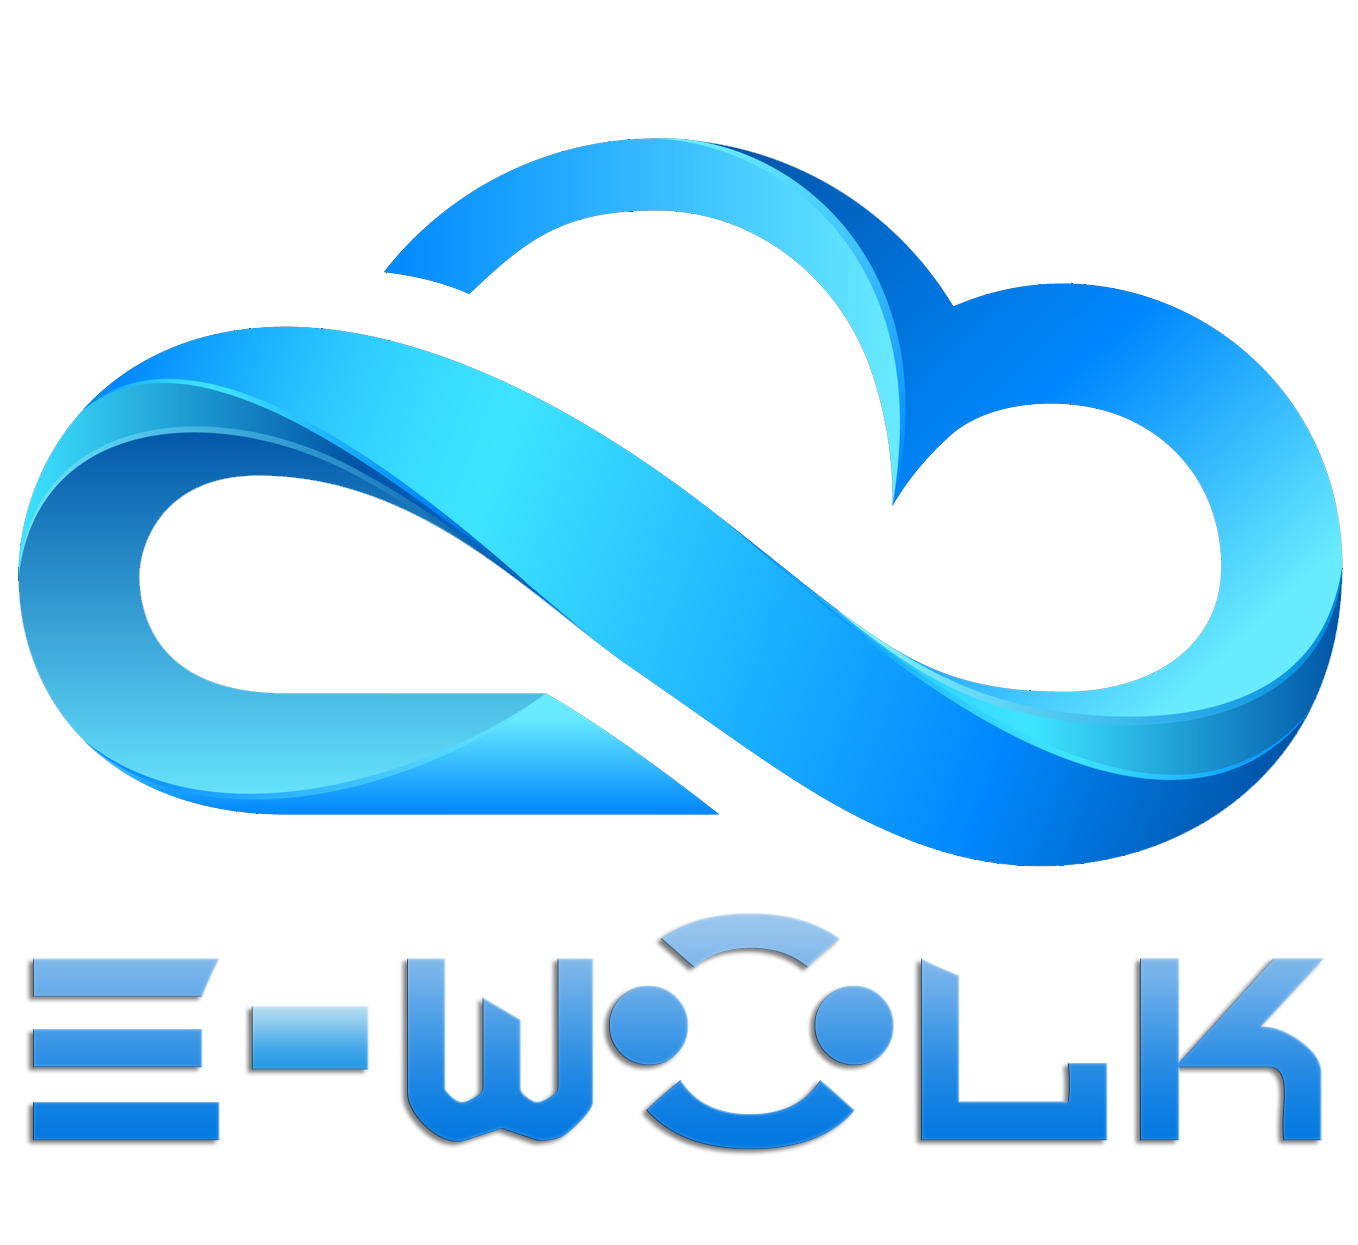 www.e-wolk.nl